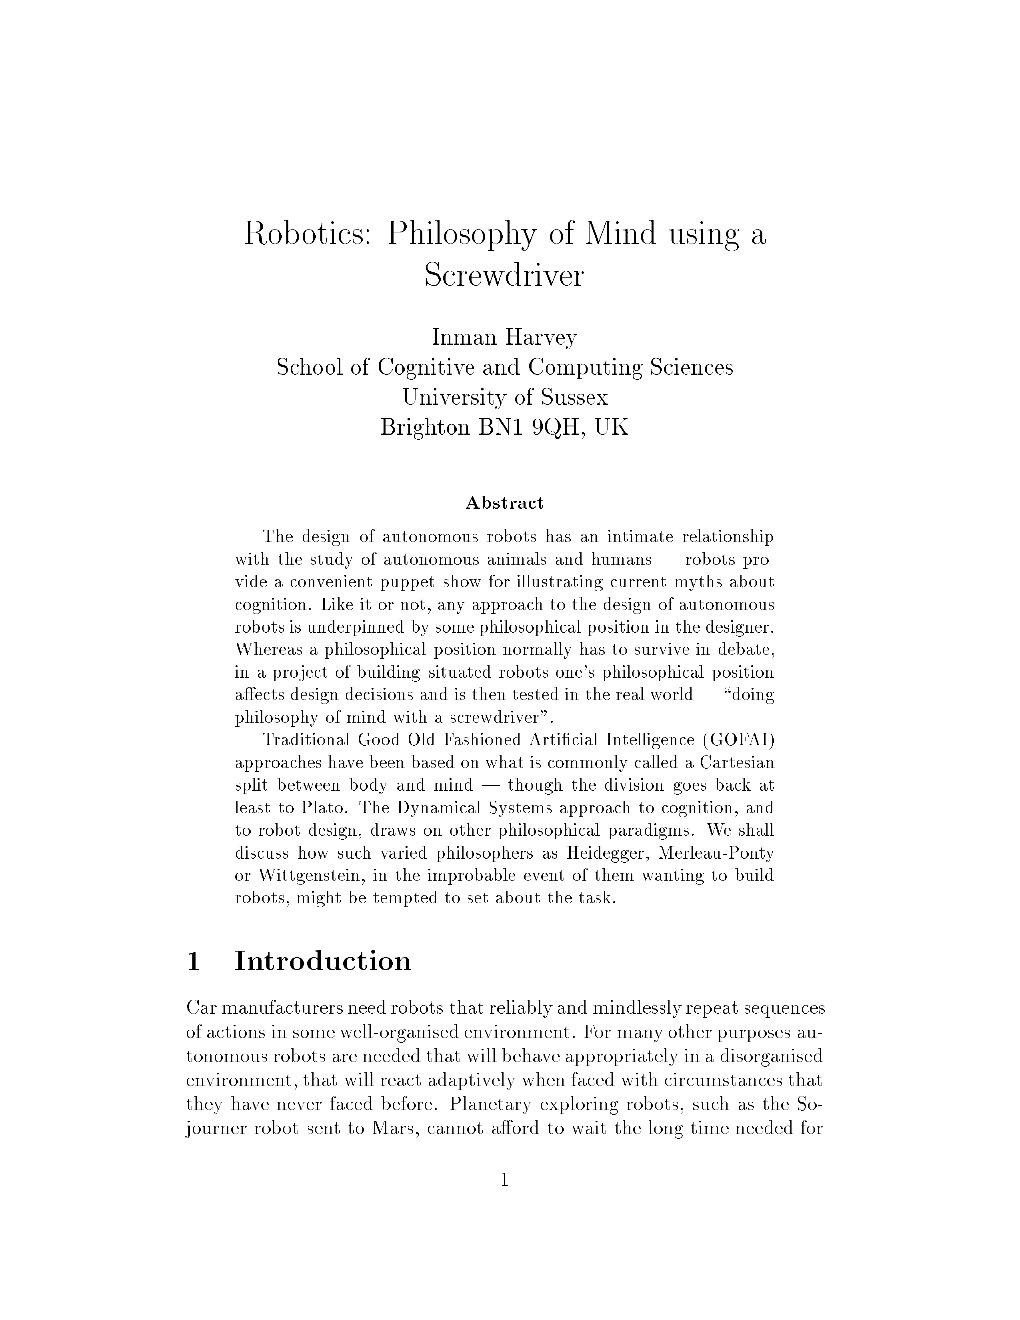 Robotics: Philosophy of Mind Using a Screwdriver